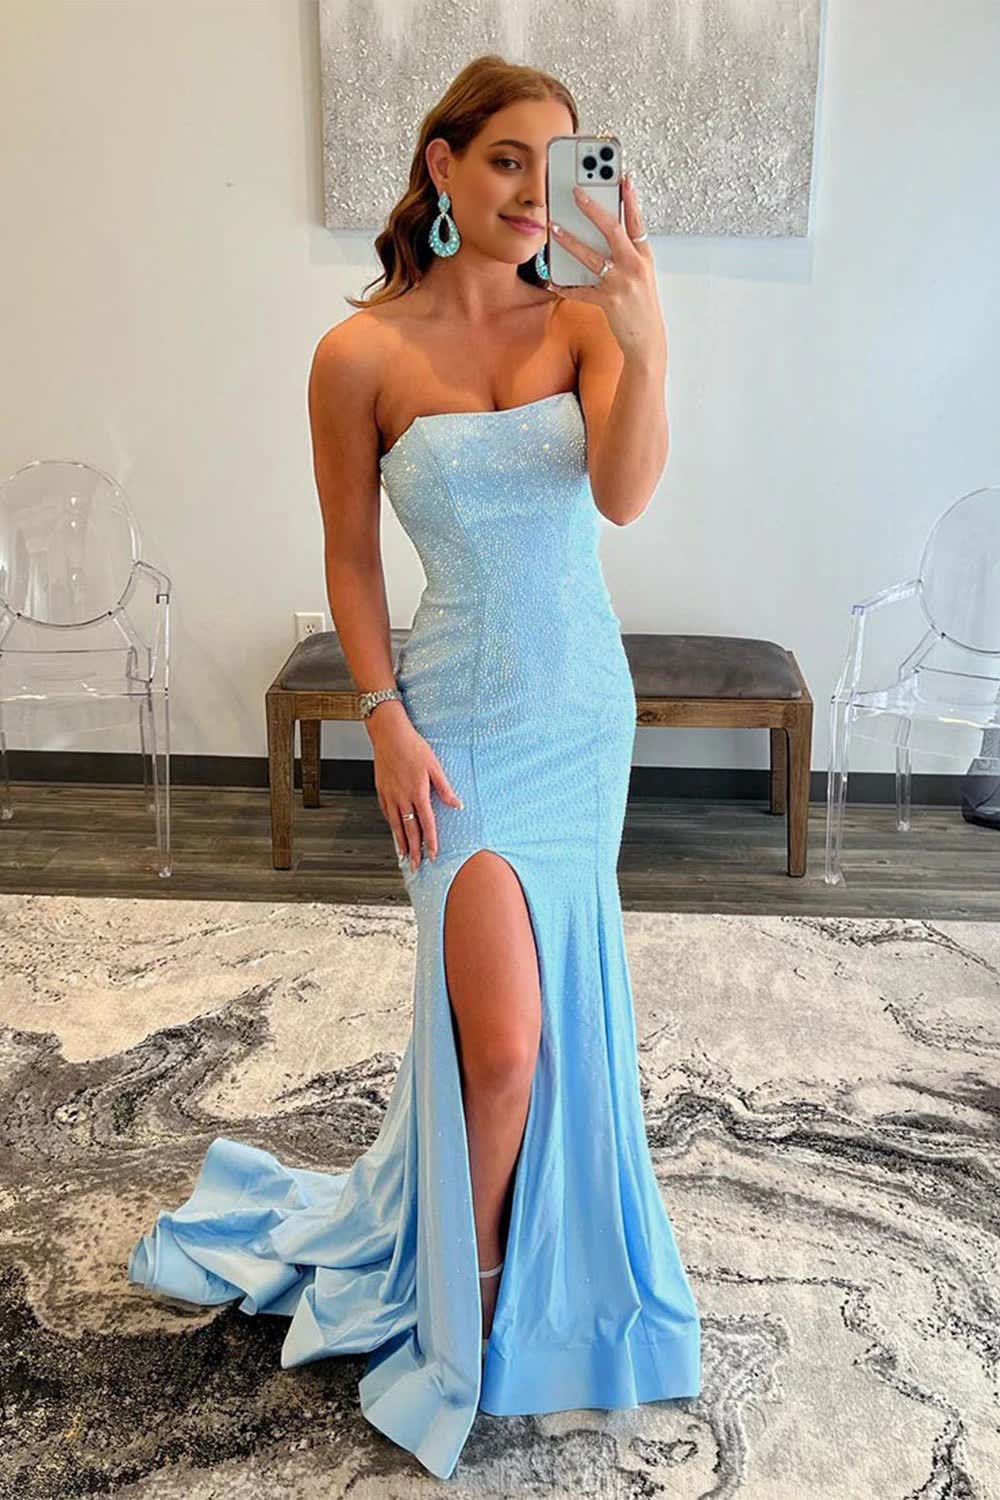 Blue Strapless Mermaid Corset Prom Dress outfits, Blue Strapless Mermaid Prom Dress